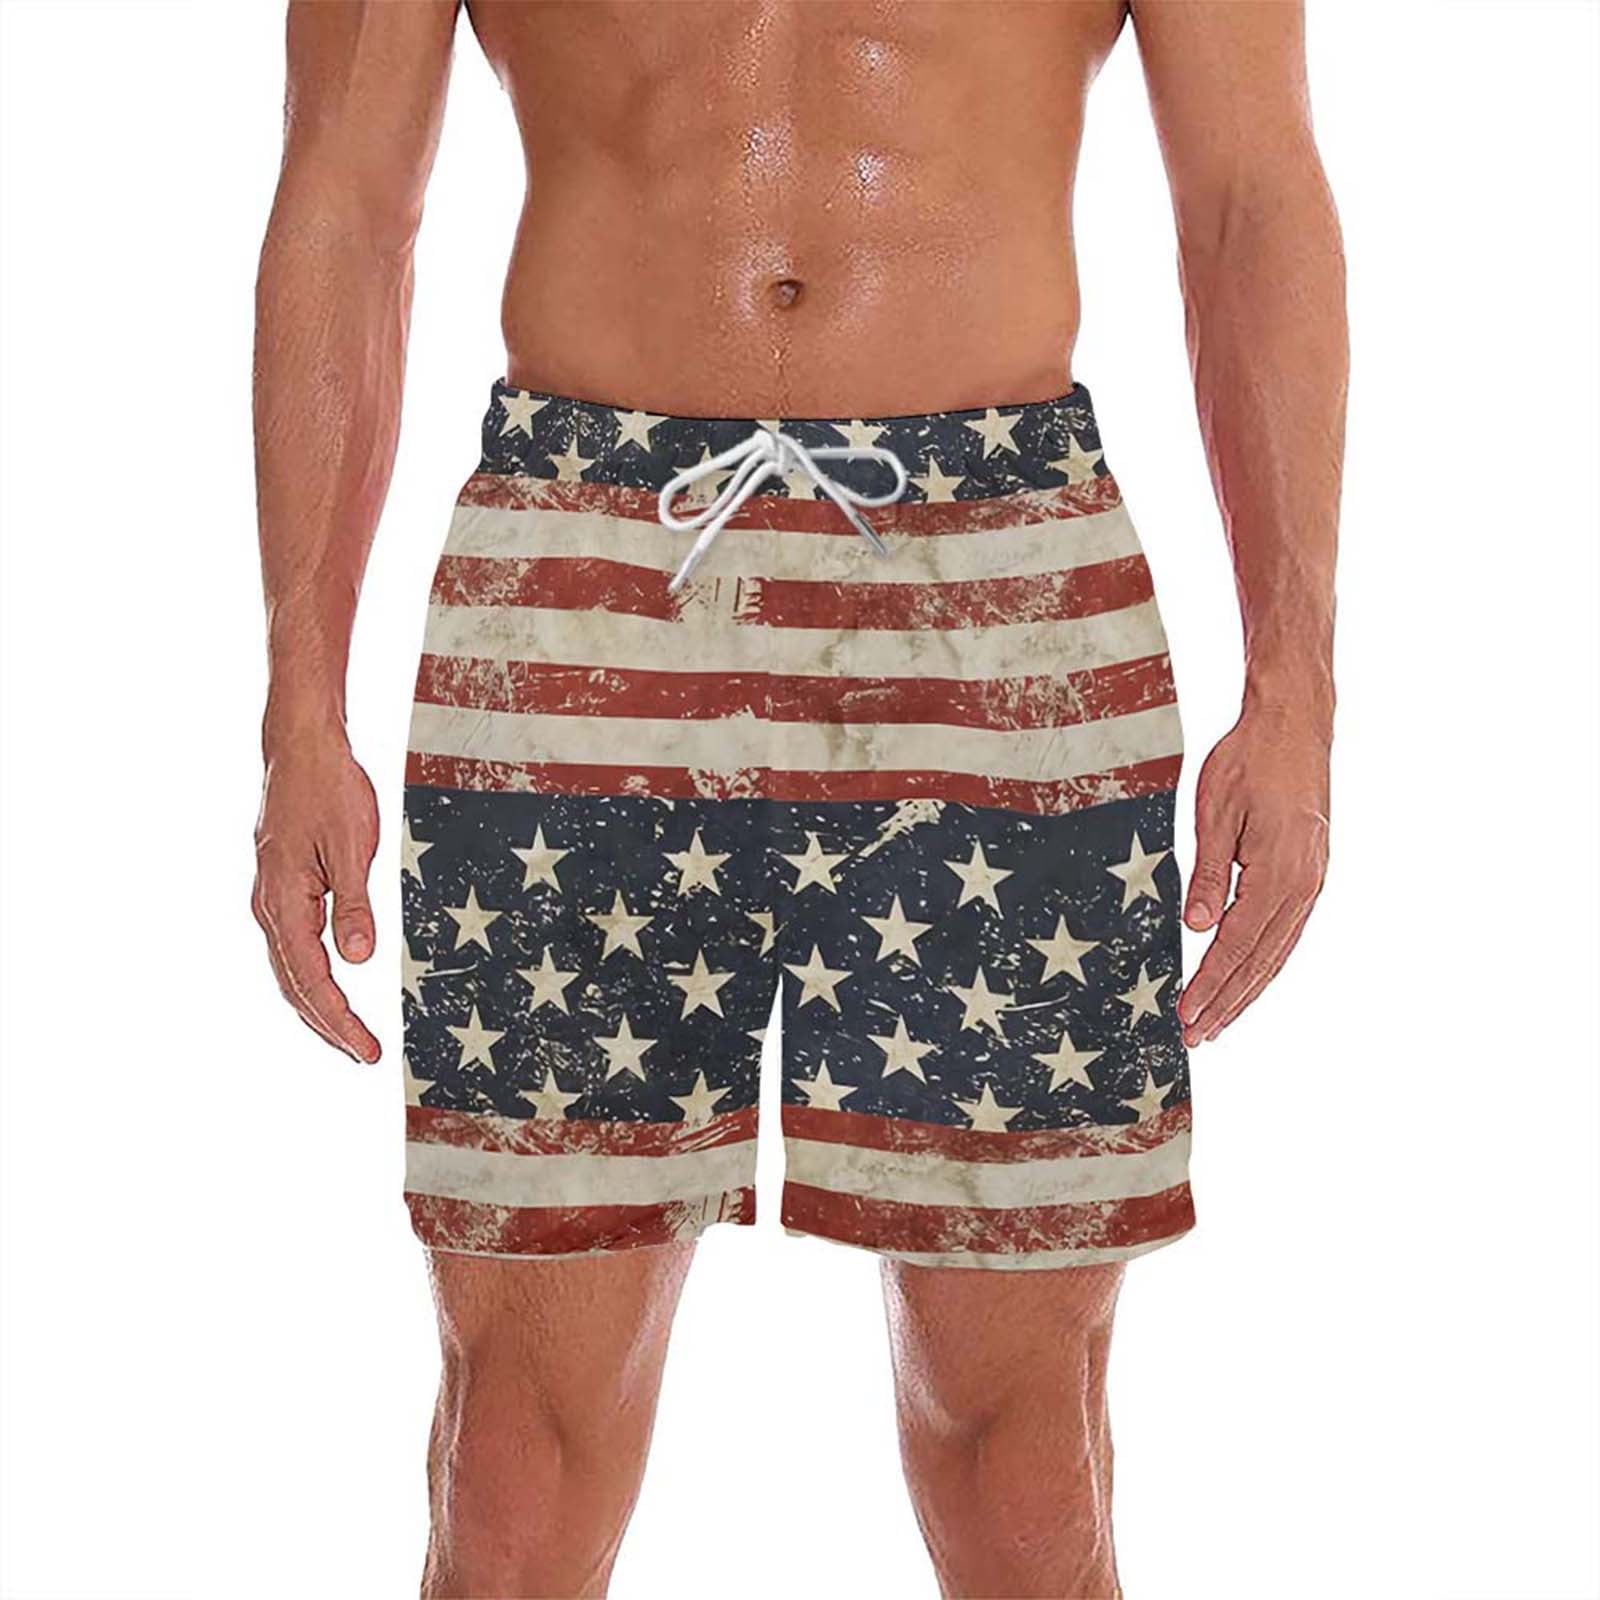 Landscap Mens Beach Swim Trunks Printed Elastic Waist Casual Summer Shorts Quick Dry Hawaiian Shorts Boardshort 